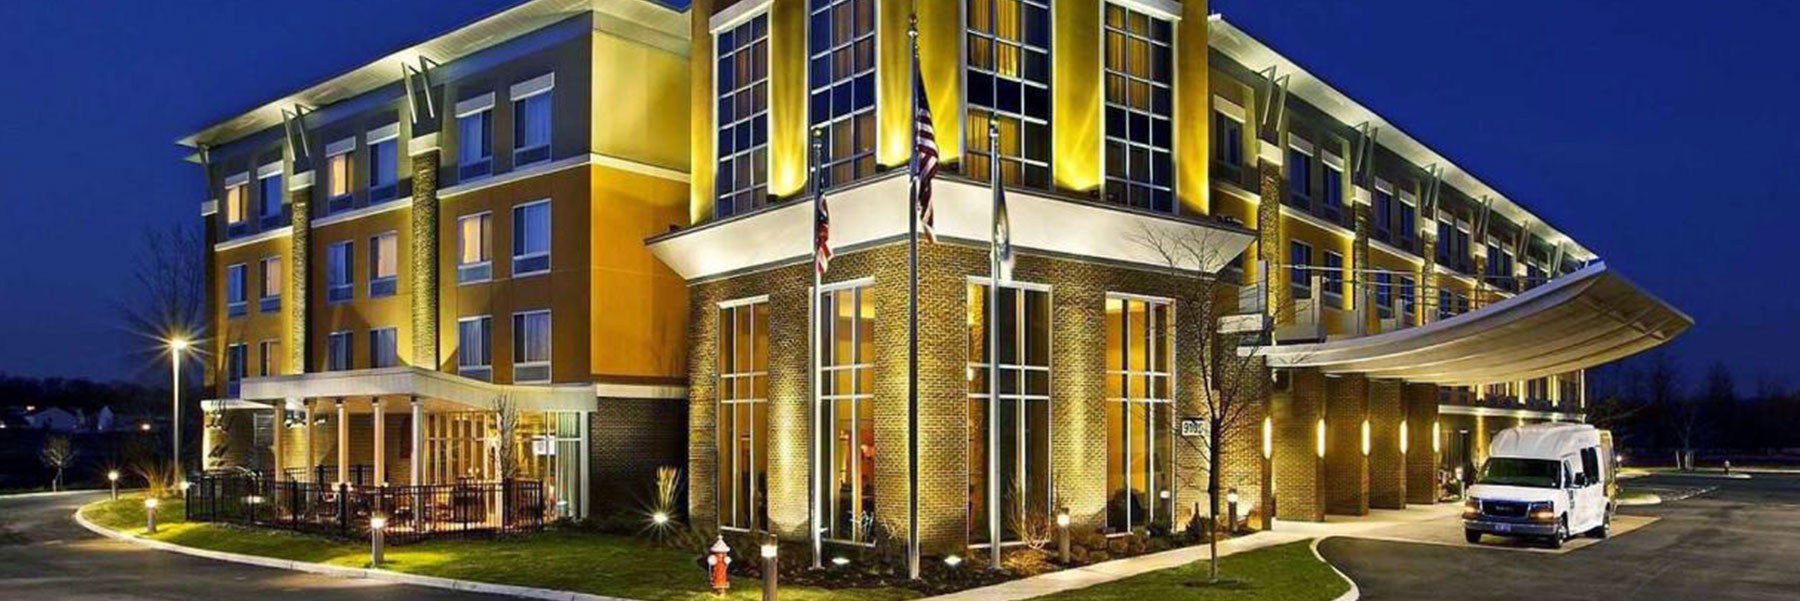 Embassy Suites Hotel - Airport | Columbus, OH 43219